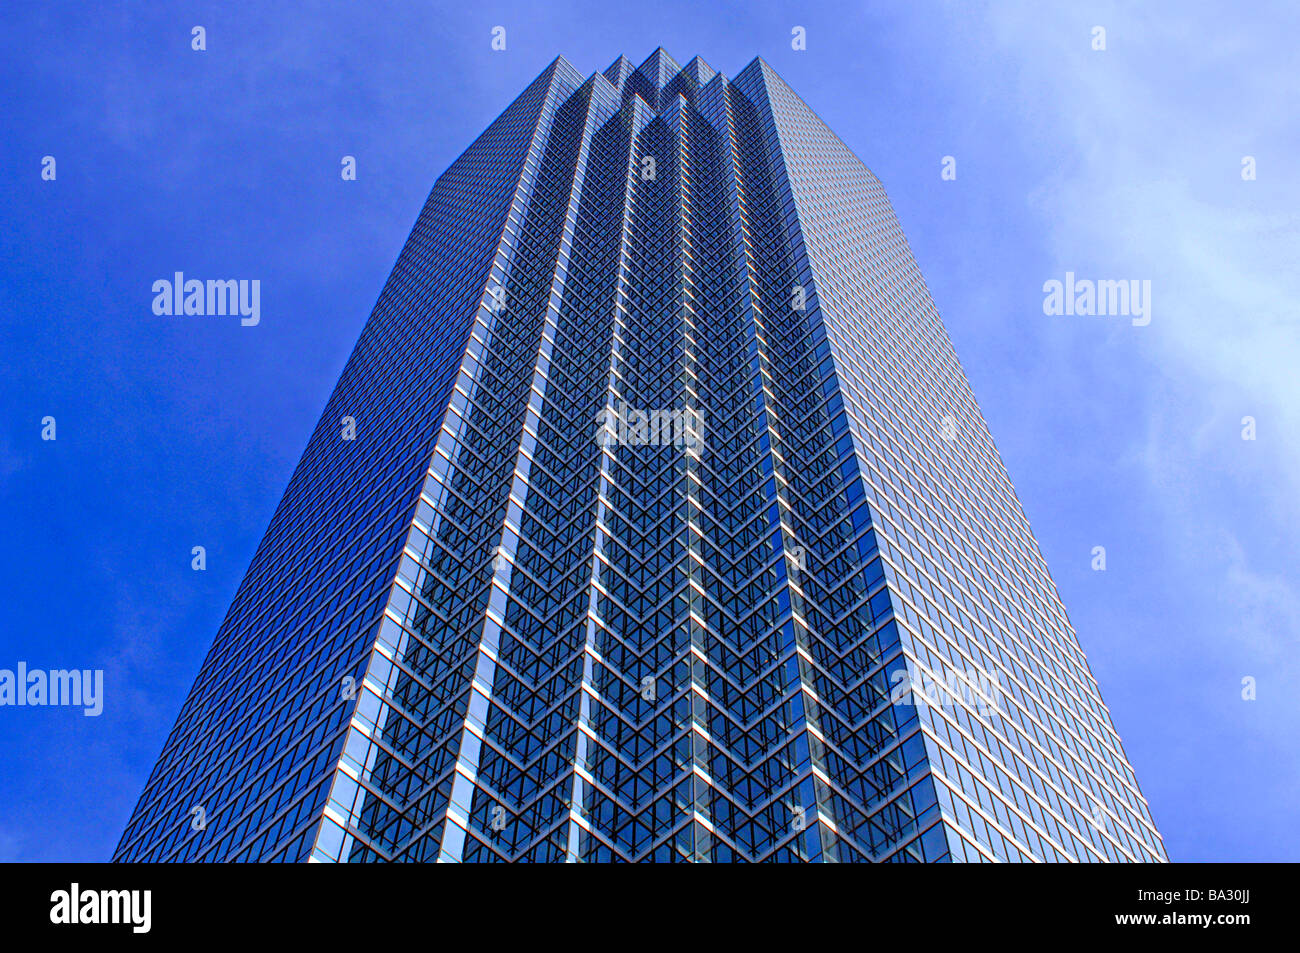 Towering modern glass skyscraper in an urban city Stock Photo